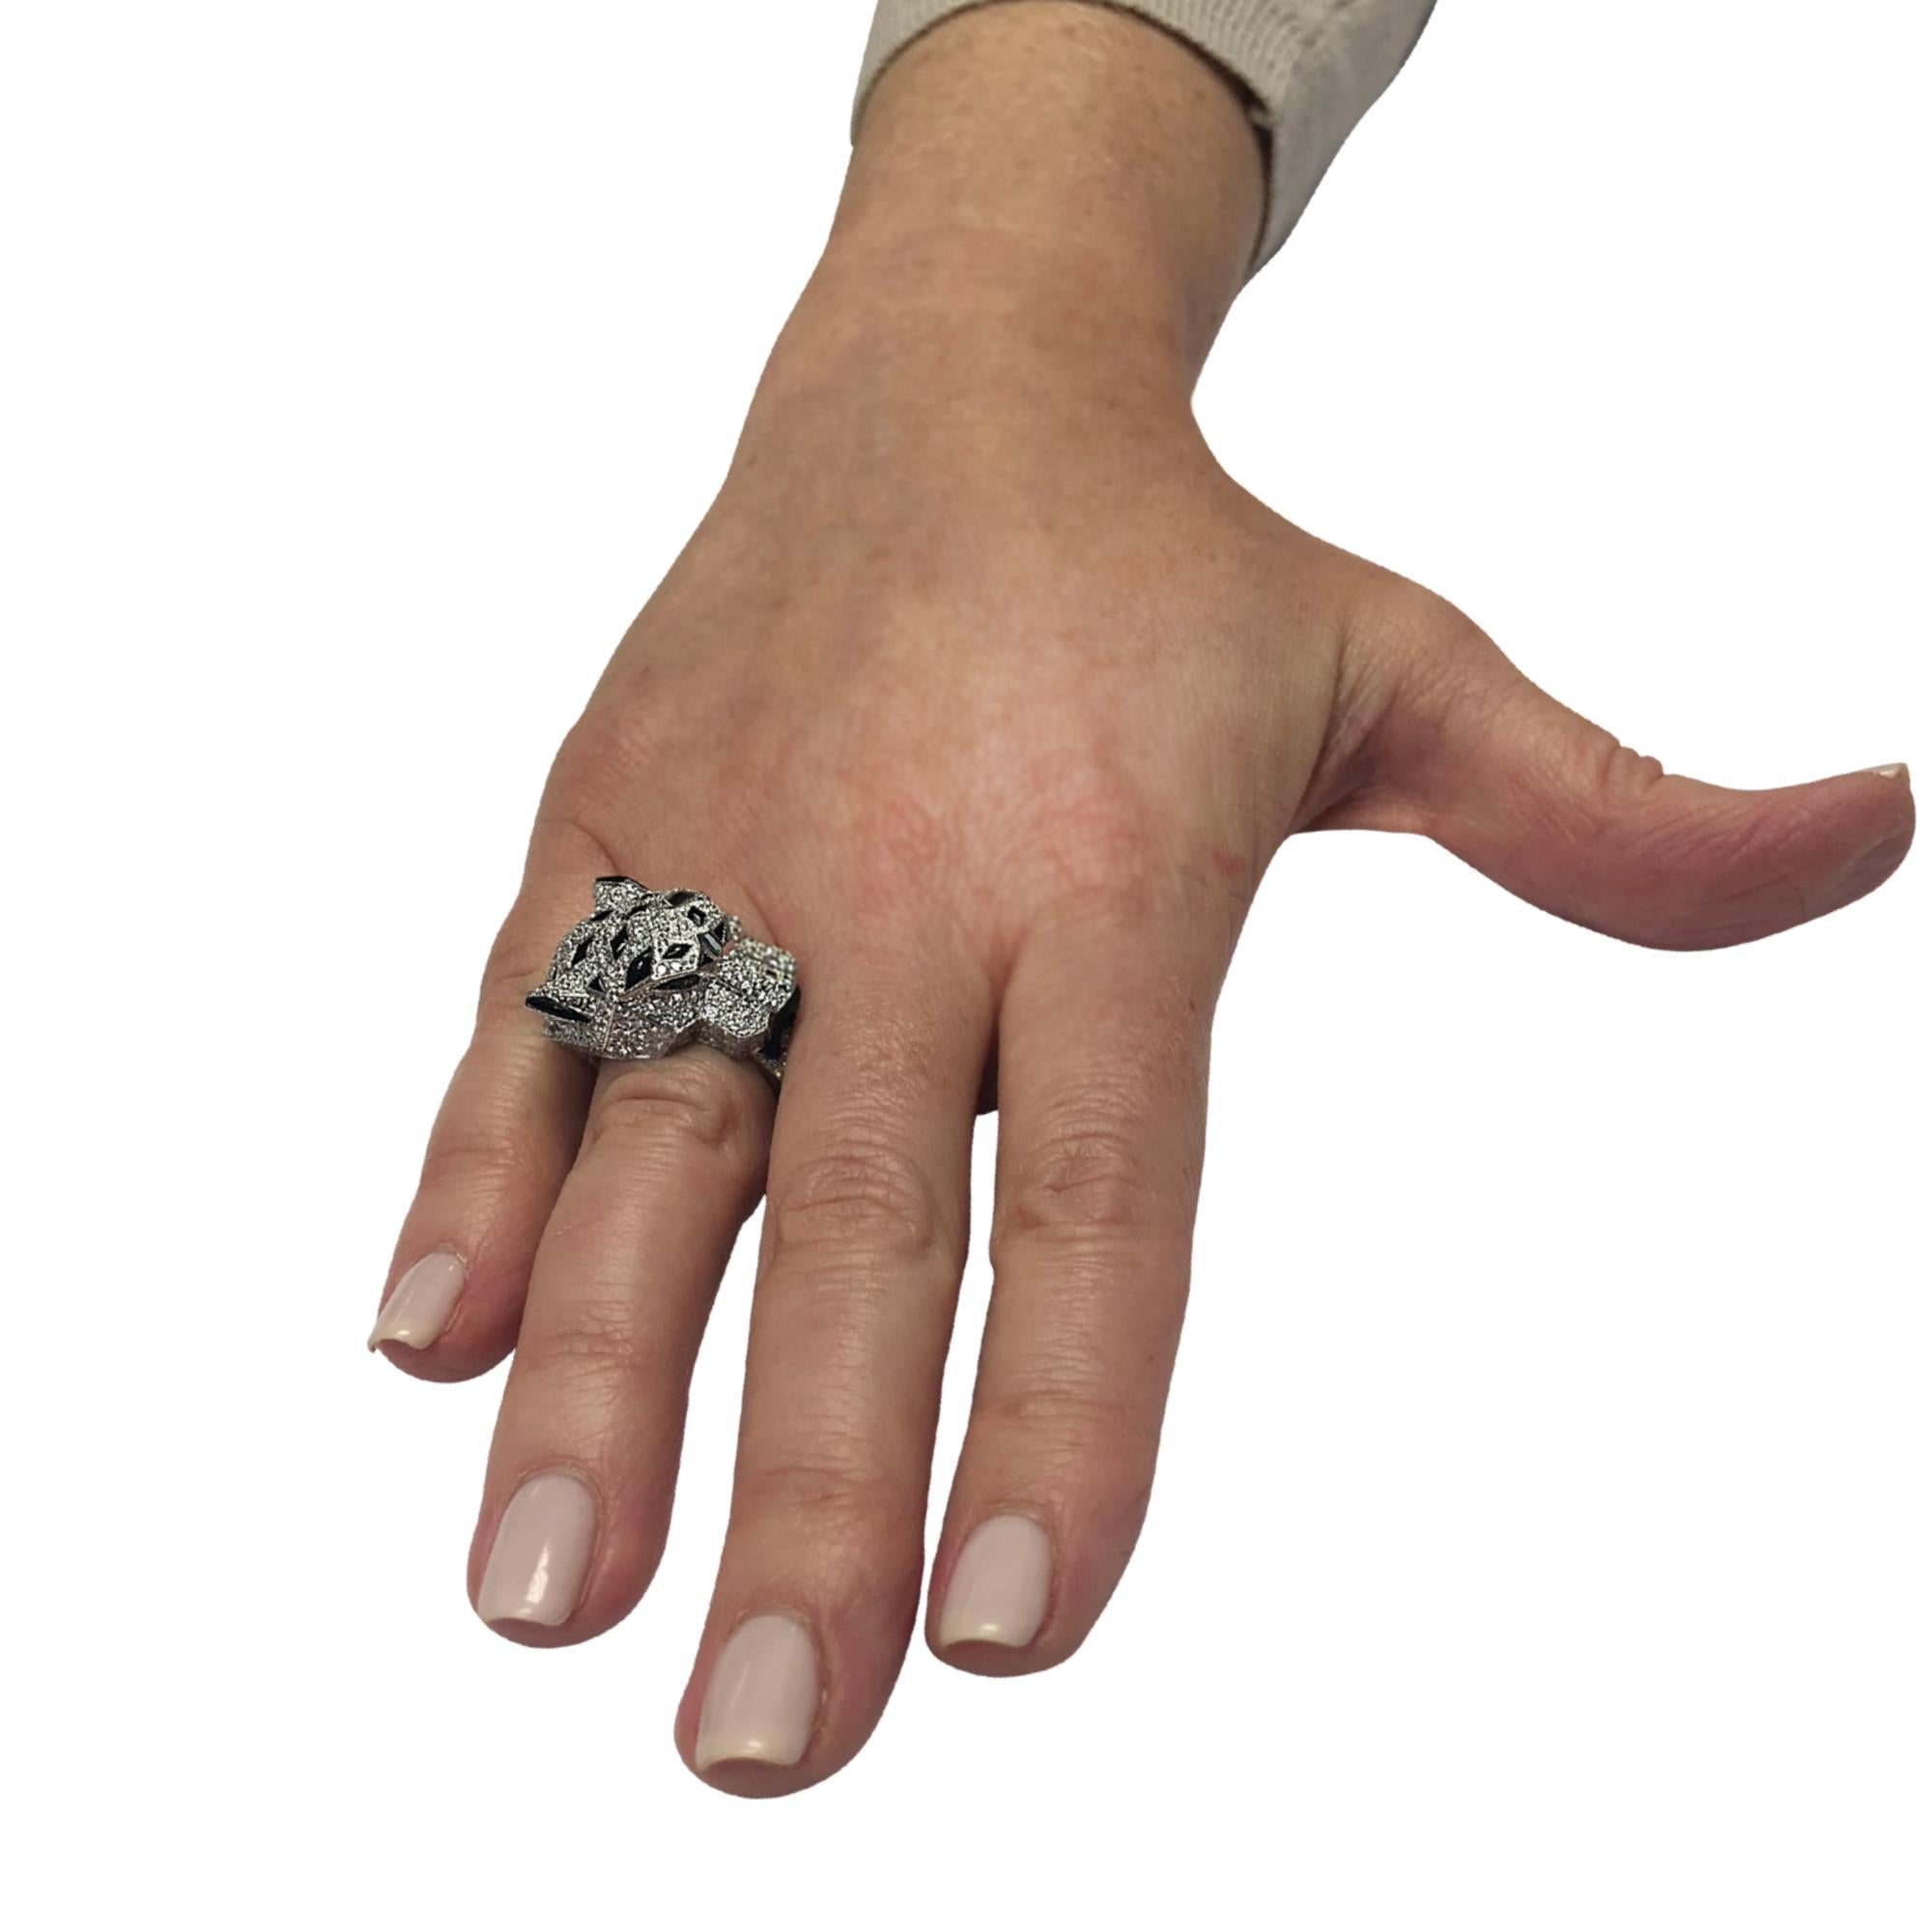 cartier panthere diamond ring